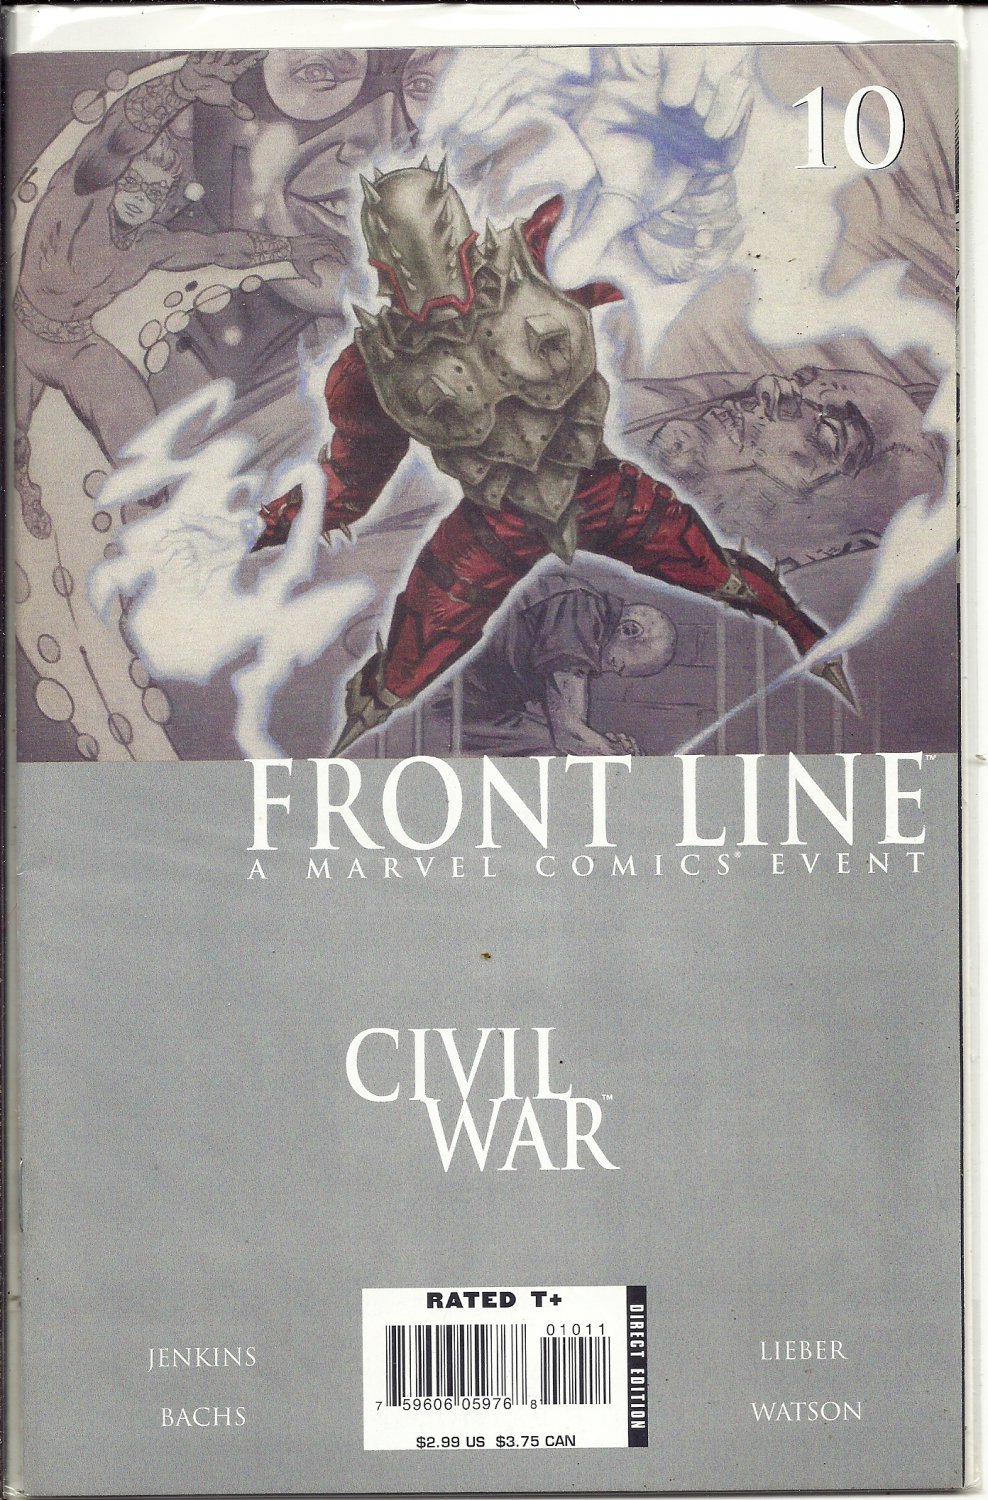 (CB-51) 2006 Marvel Comic Book: Civil War Frontline #10